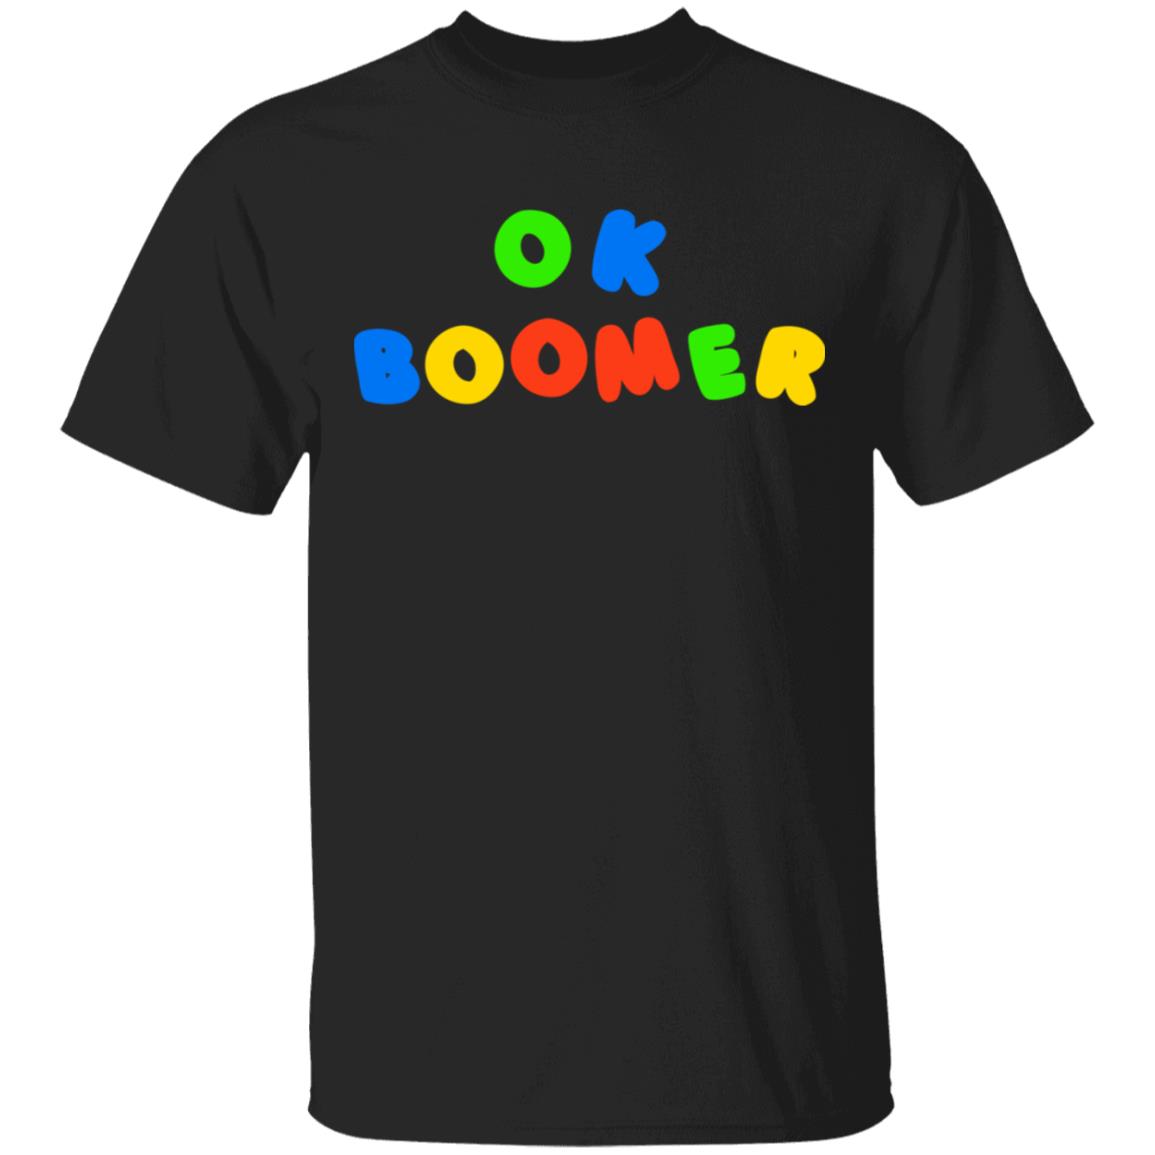 OK Boomer Fridge Magnet Shirt
#OKBoomer #FridgeMagnetShirt #USFashionTrends #FunnyApparel #MillennialStyle #AmericanHumor #TrendyTees #PopCultureFashion #GenerationGap #SarcasticFashion #YouthCulture #BoomerJokes

tipatee.com/product/ok-boo…